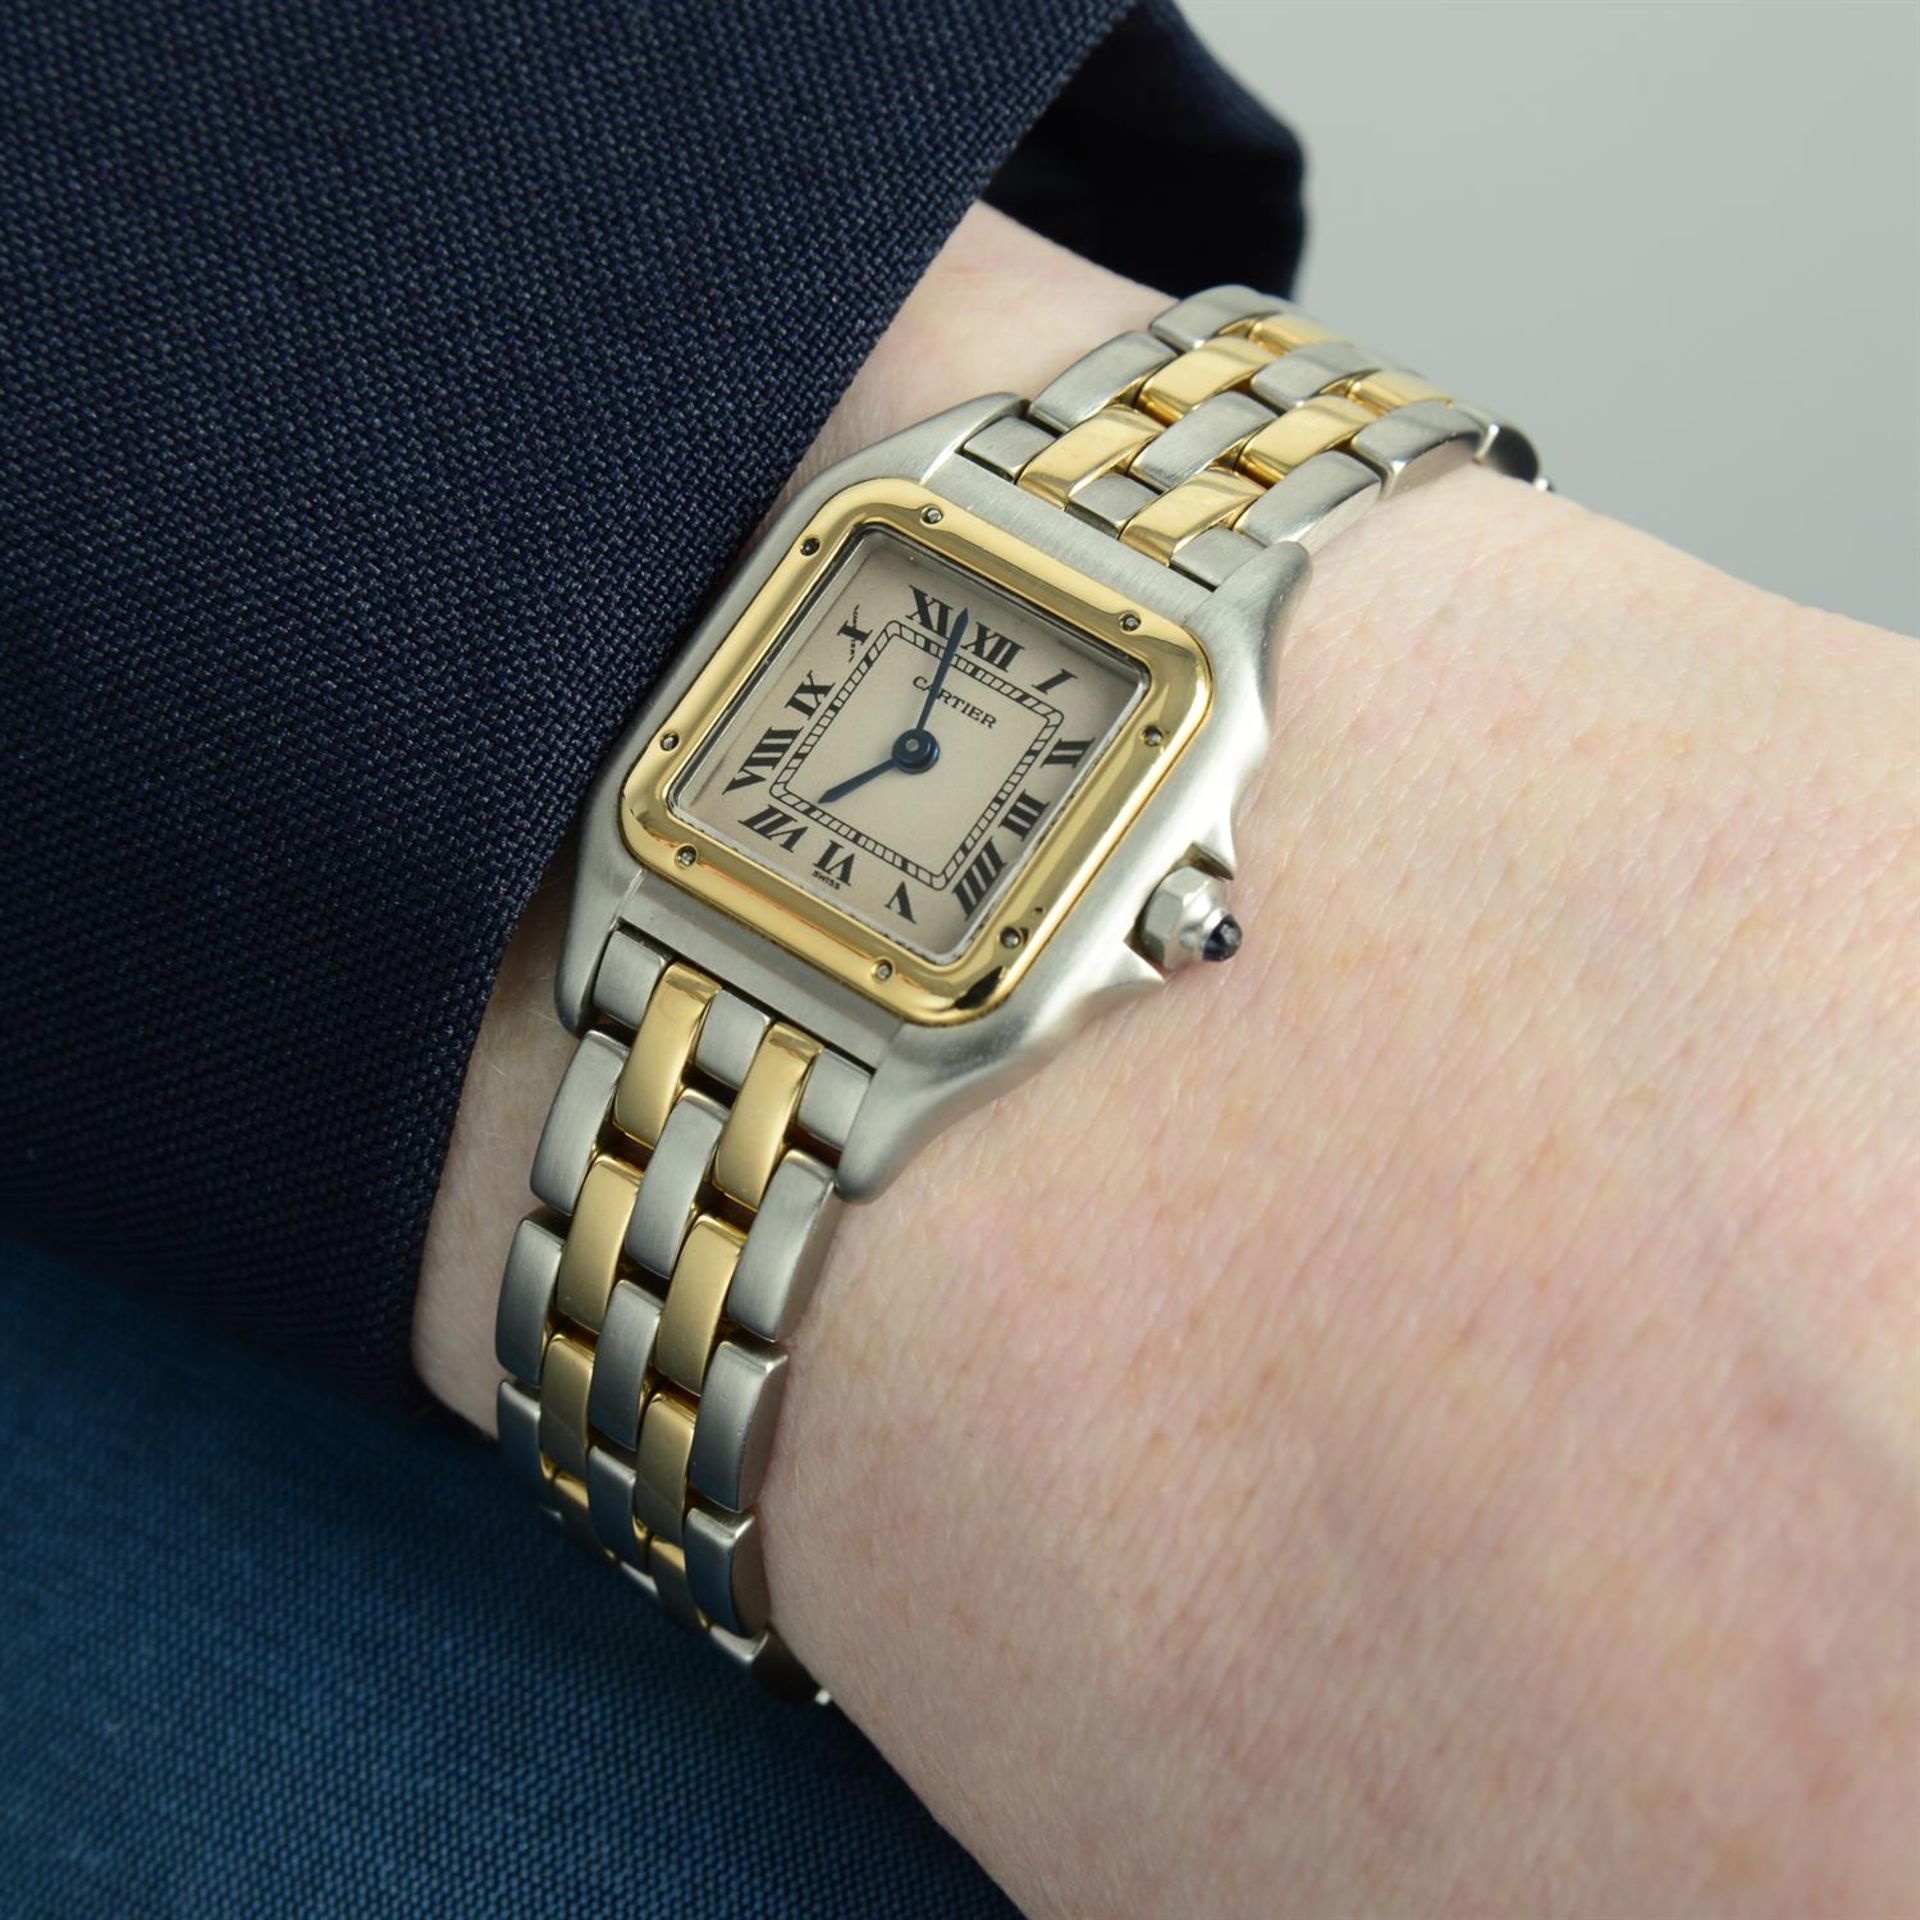 CARTIER - a bi-metal Panthere bracelet watch, 21mm. - Image 5 of 5